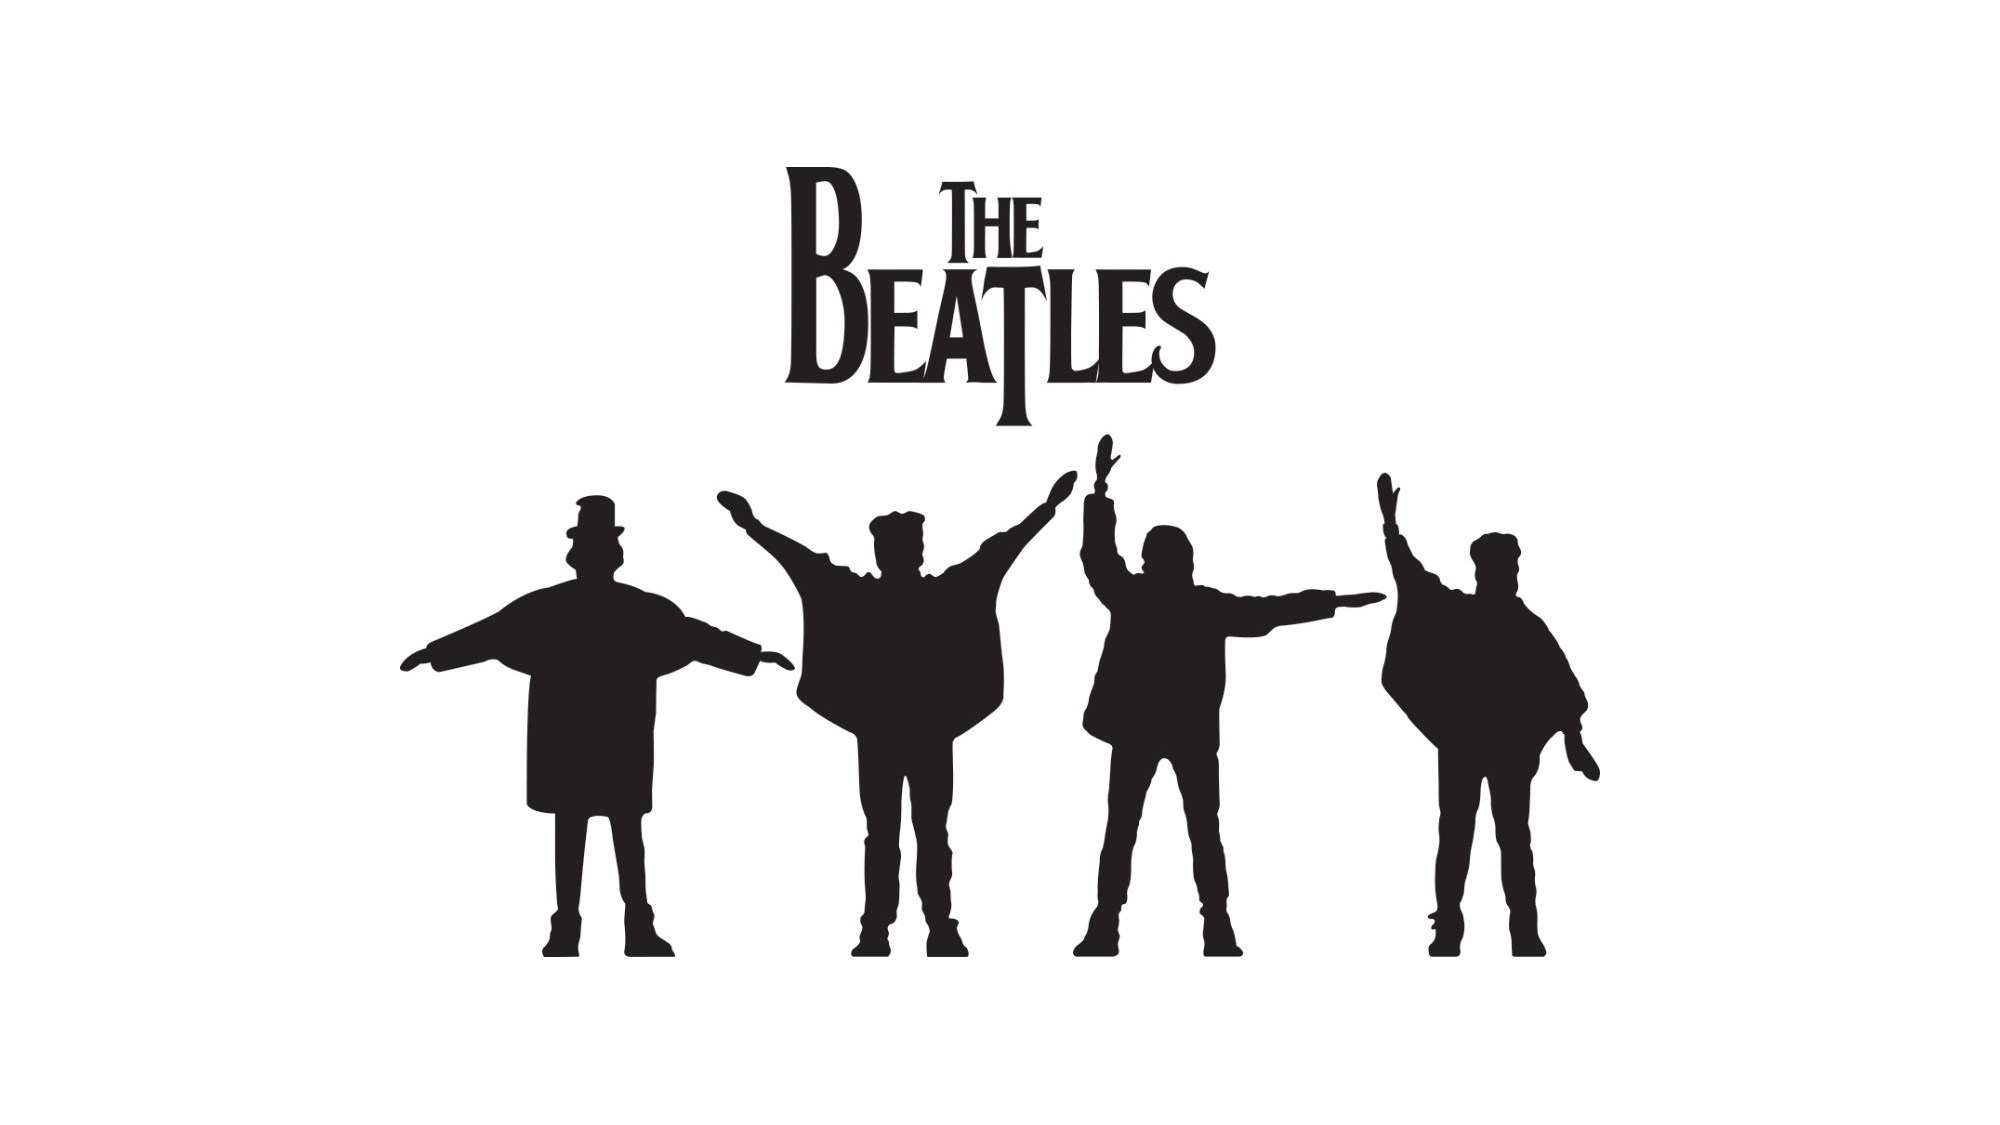 the beatles logo wallpaper